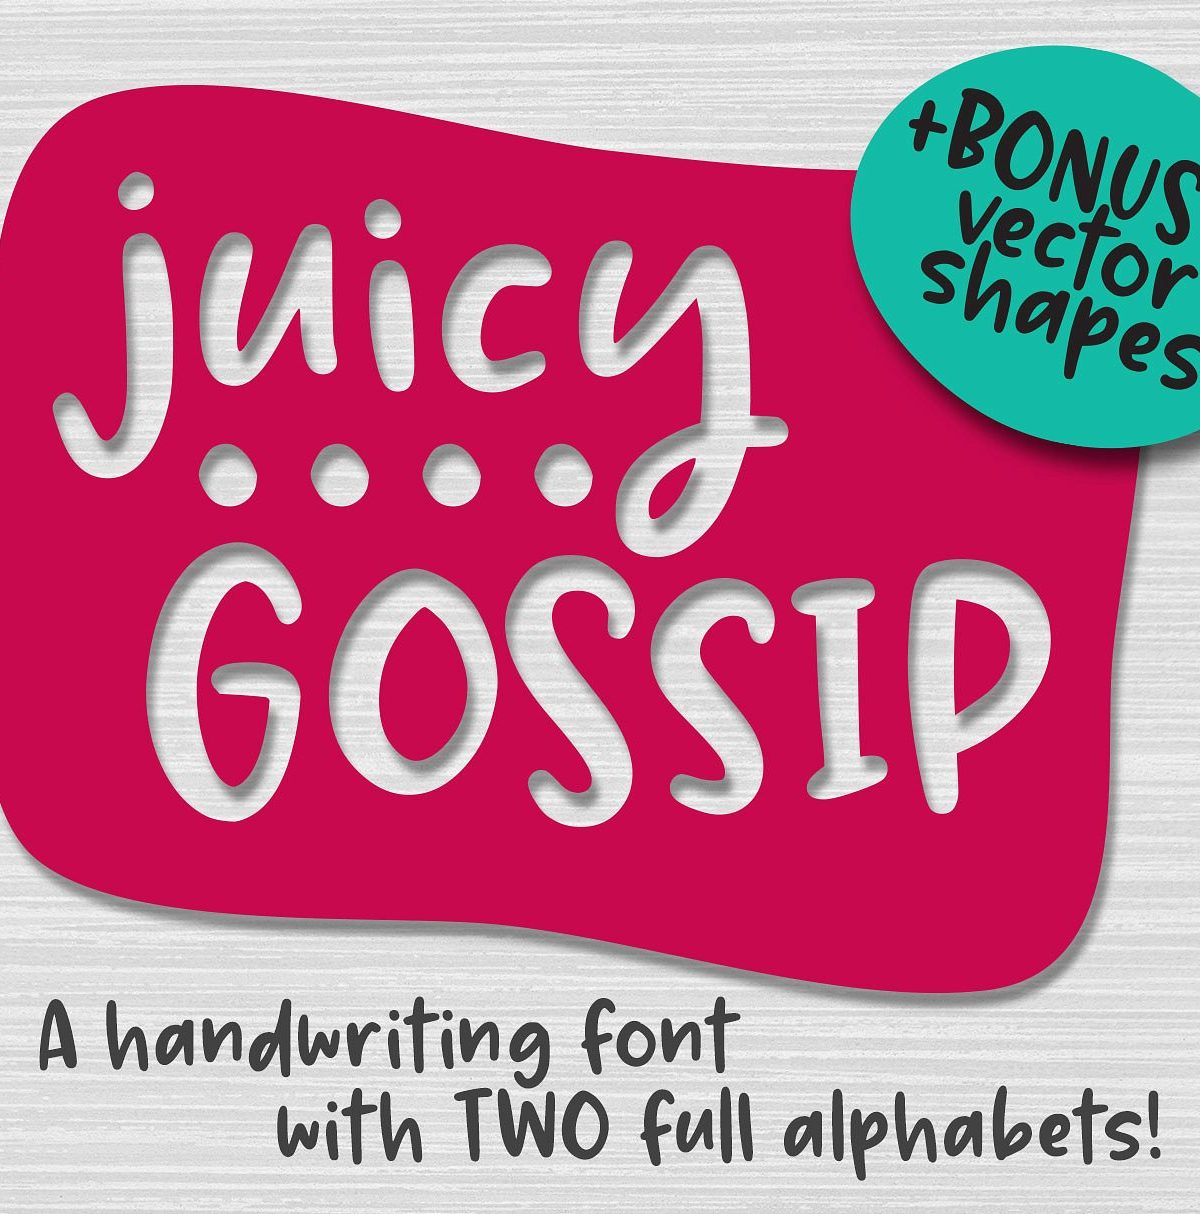 Juicy Gossip Font素材中国精选英文字体